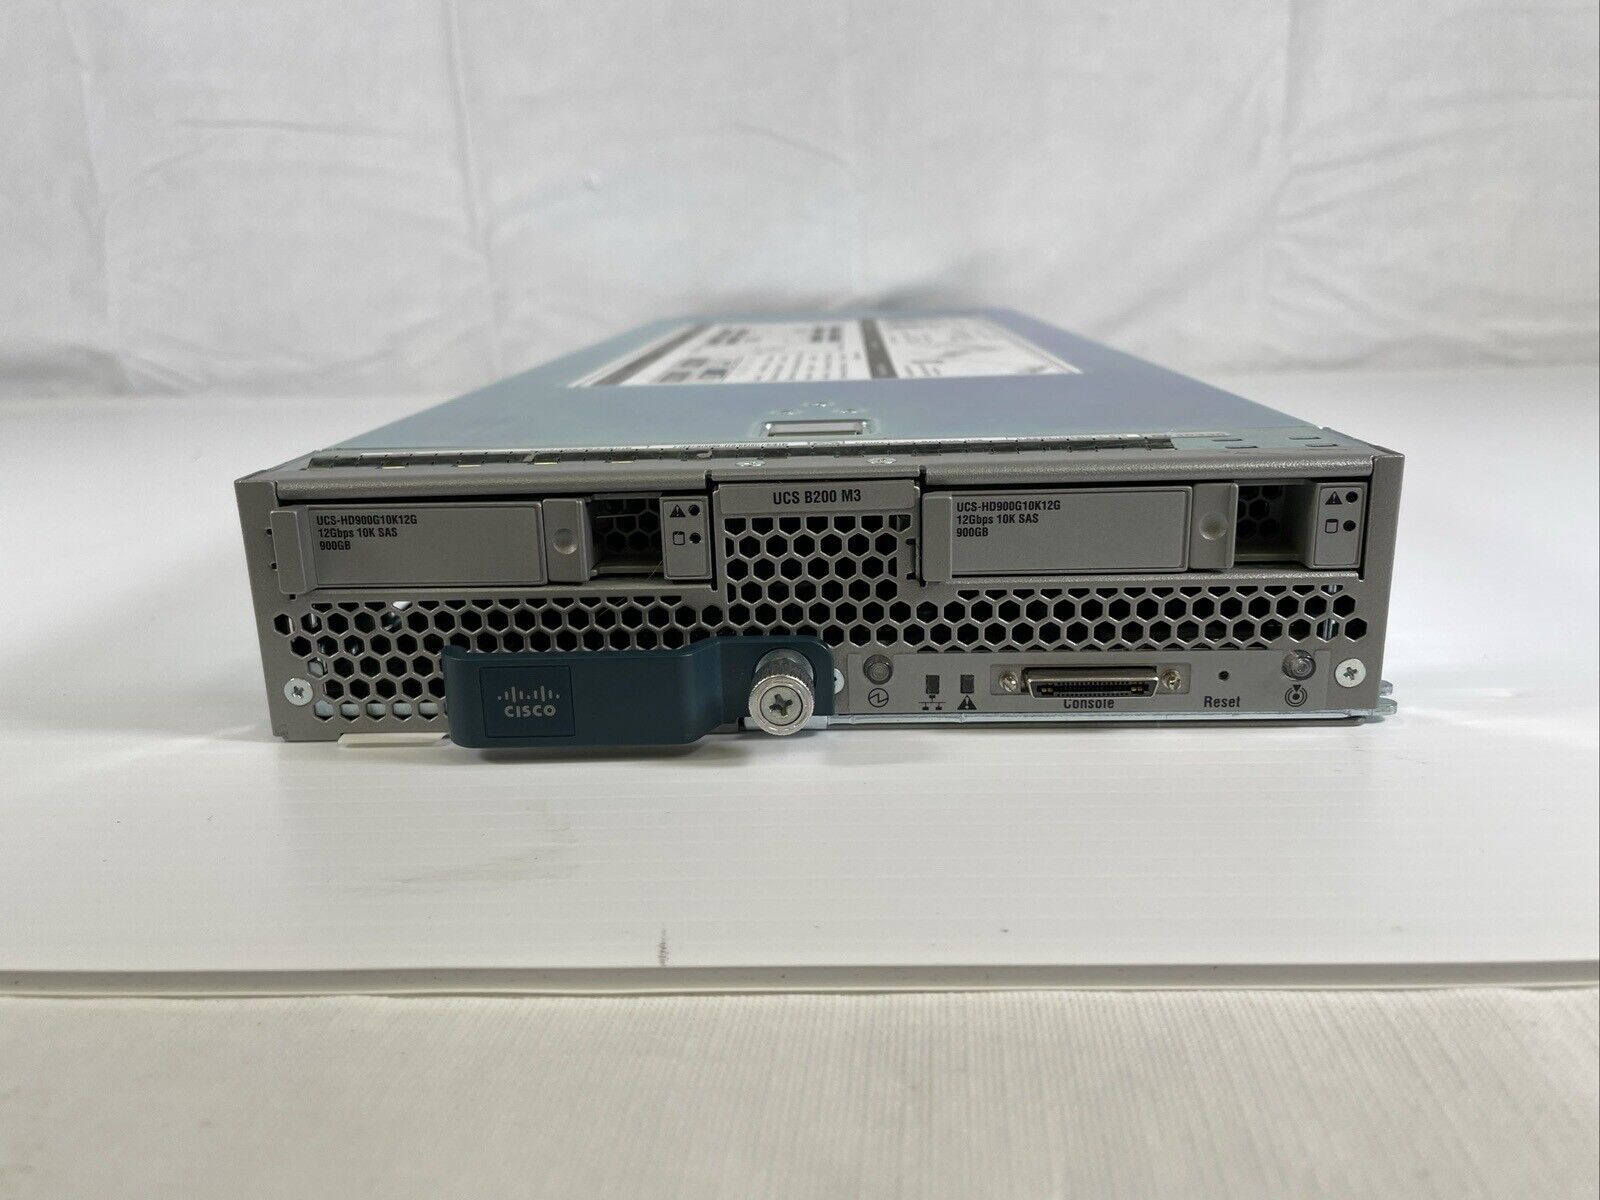 Cisco UCS-B200-M3 Blade Server 2x Xeon E5-2650 @ 2.0GHz 64GB RAM 2x 900GB HDD